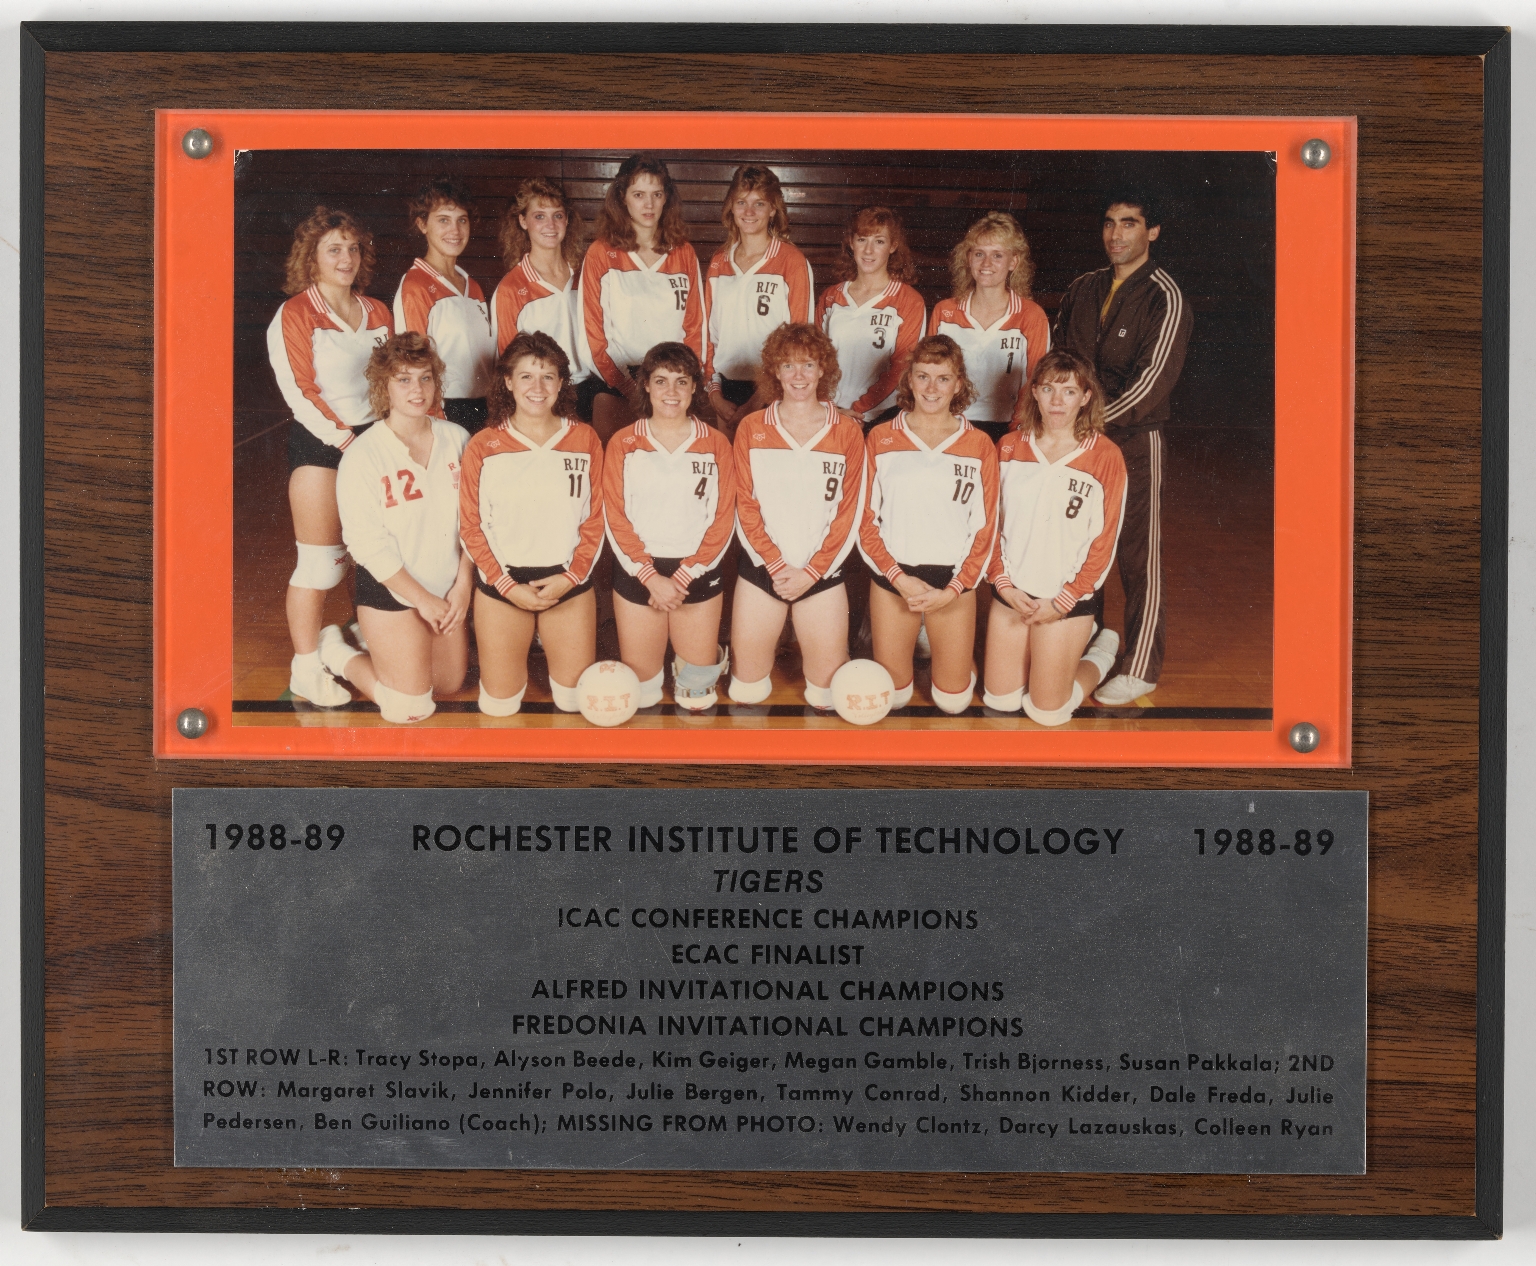 RIT 1988-89 Women's Volleyball team plaque